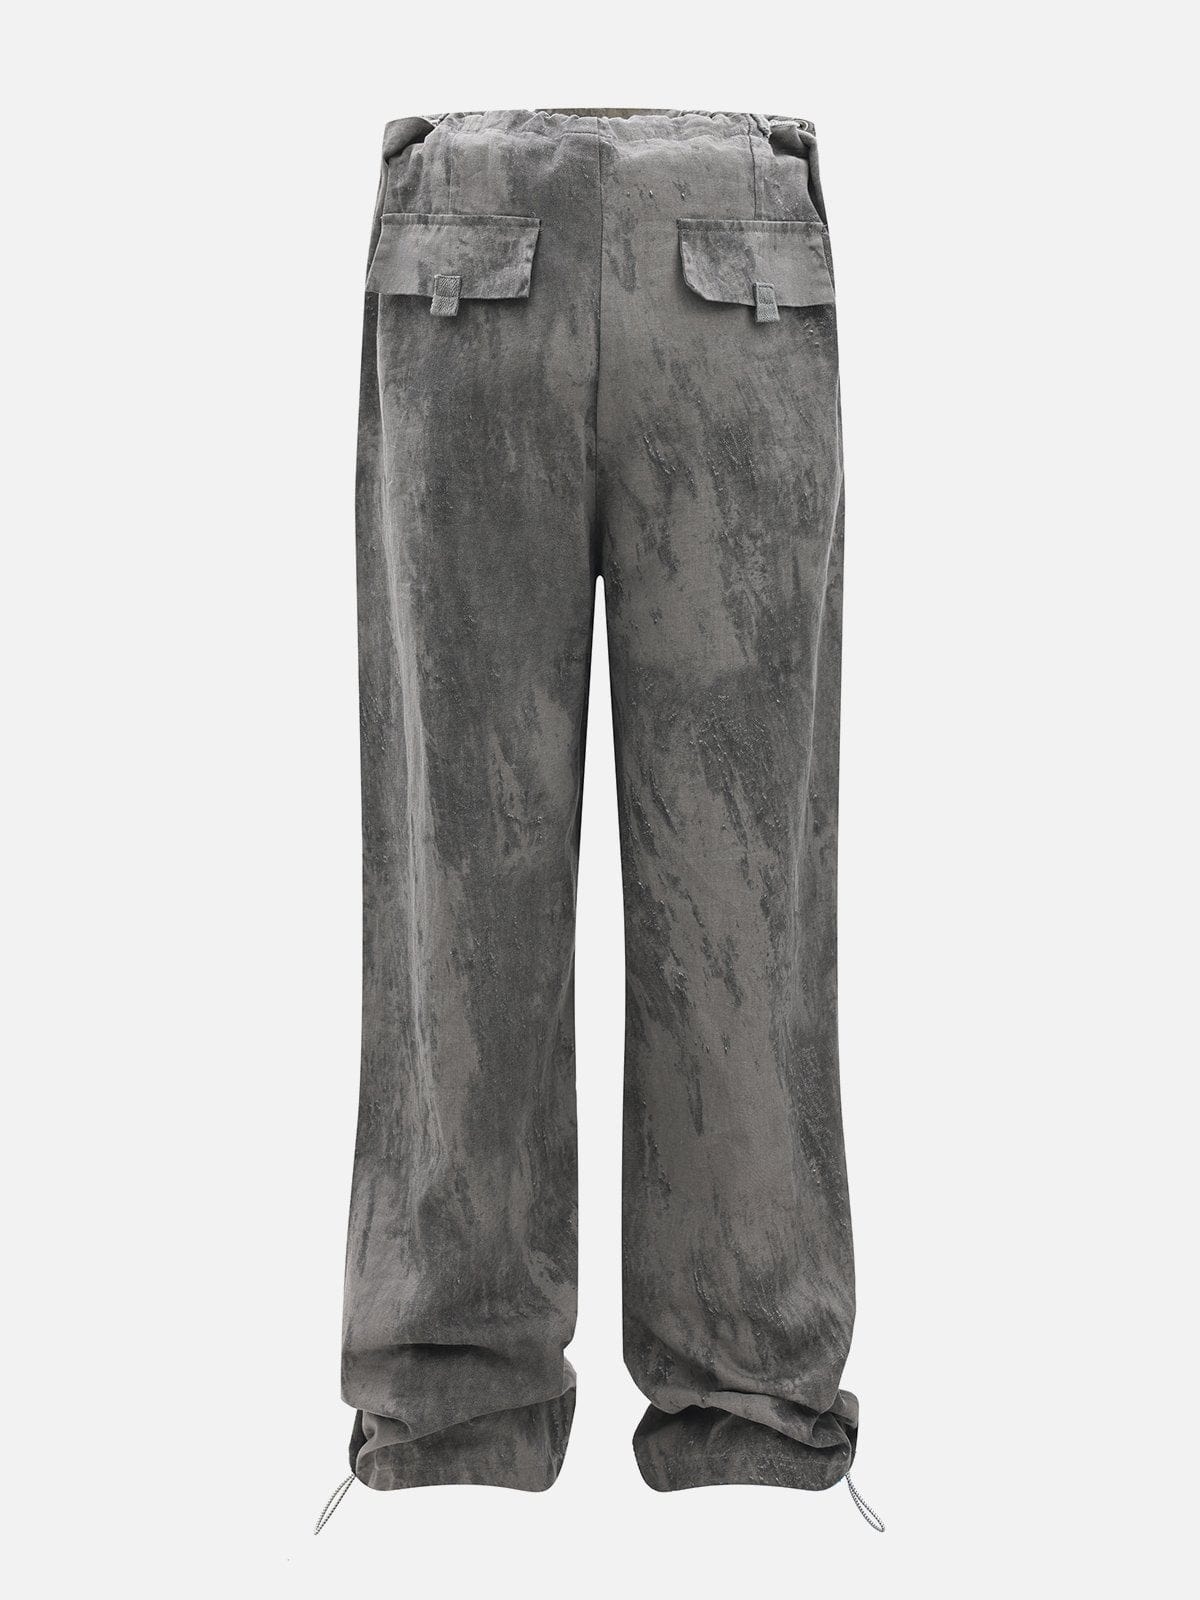 NEV Tie-Dye Gray Breathable Pants